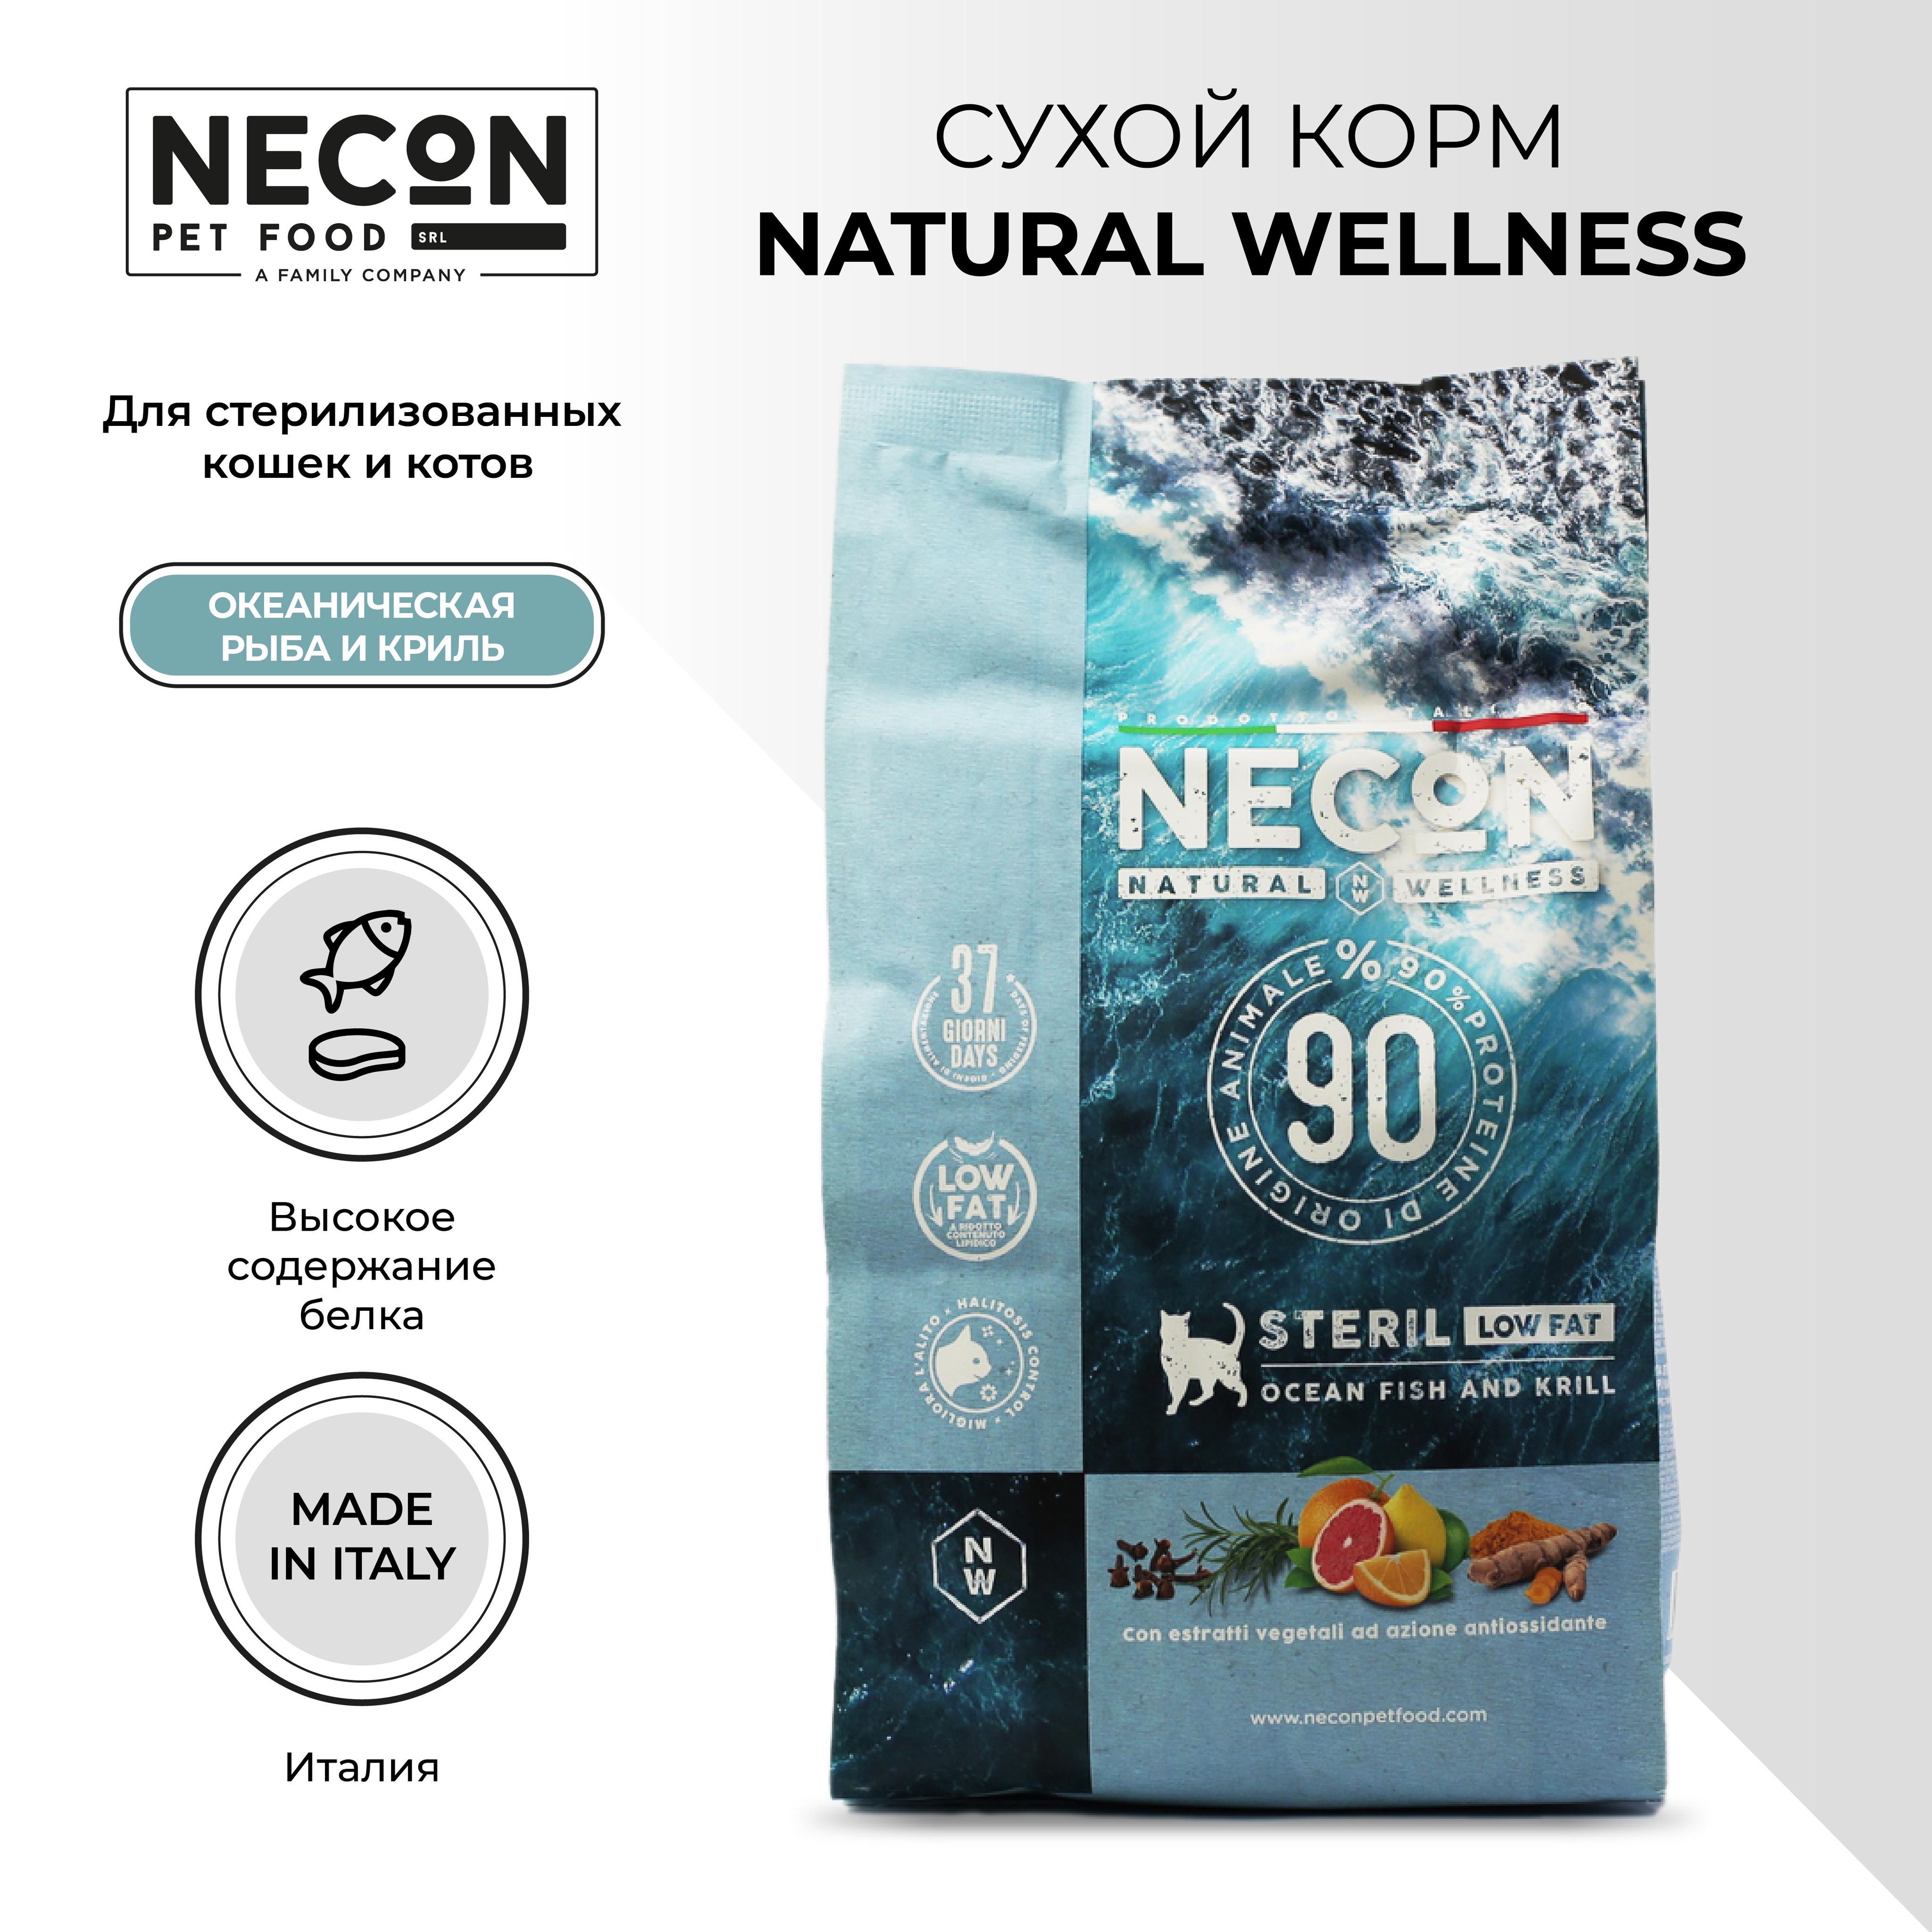 Сухой корм для кошек Necon Natural Wellness Steril Low Fat, рыба и криль 1,5 кг